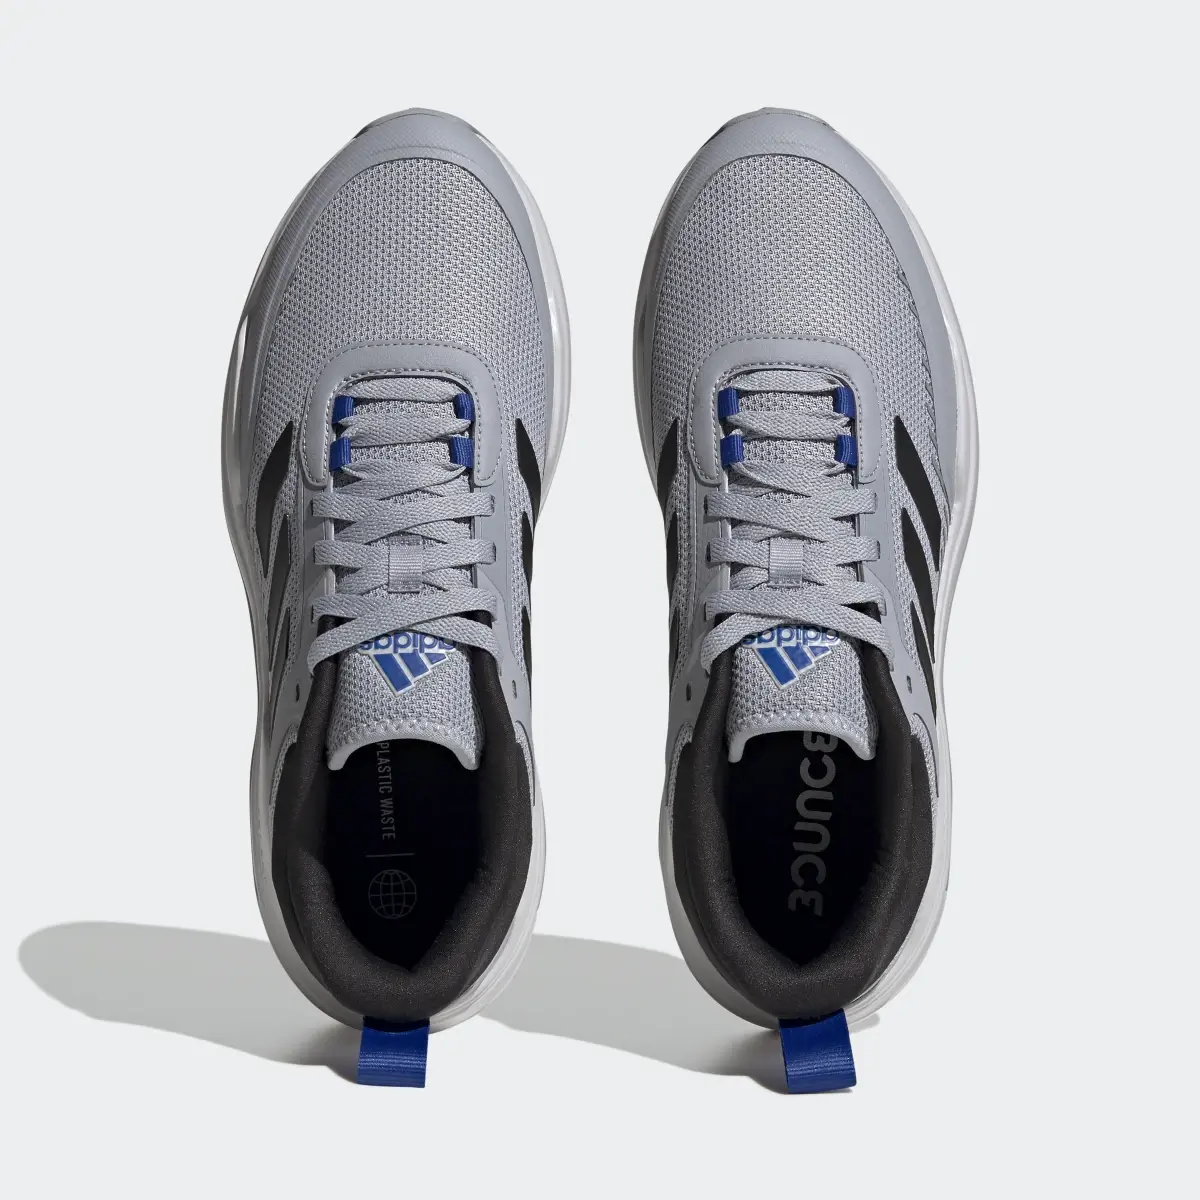 Adidas Trainer V Shoes. 3